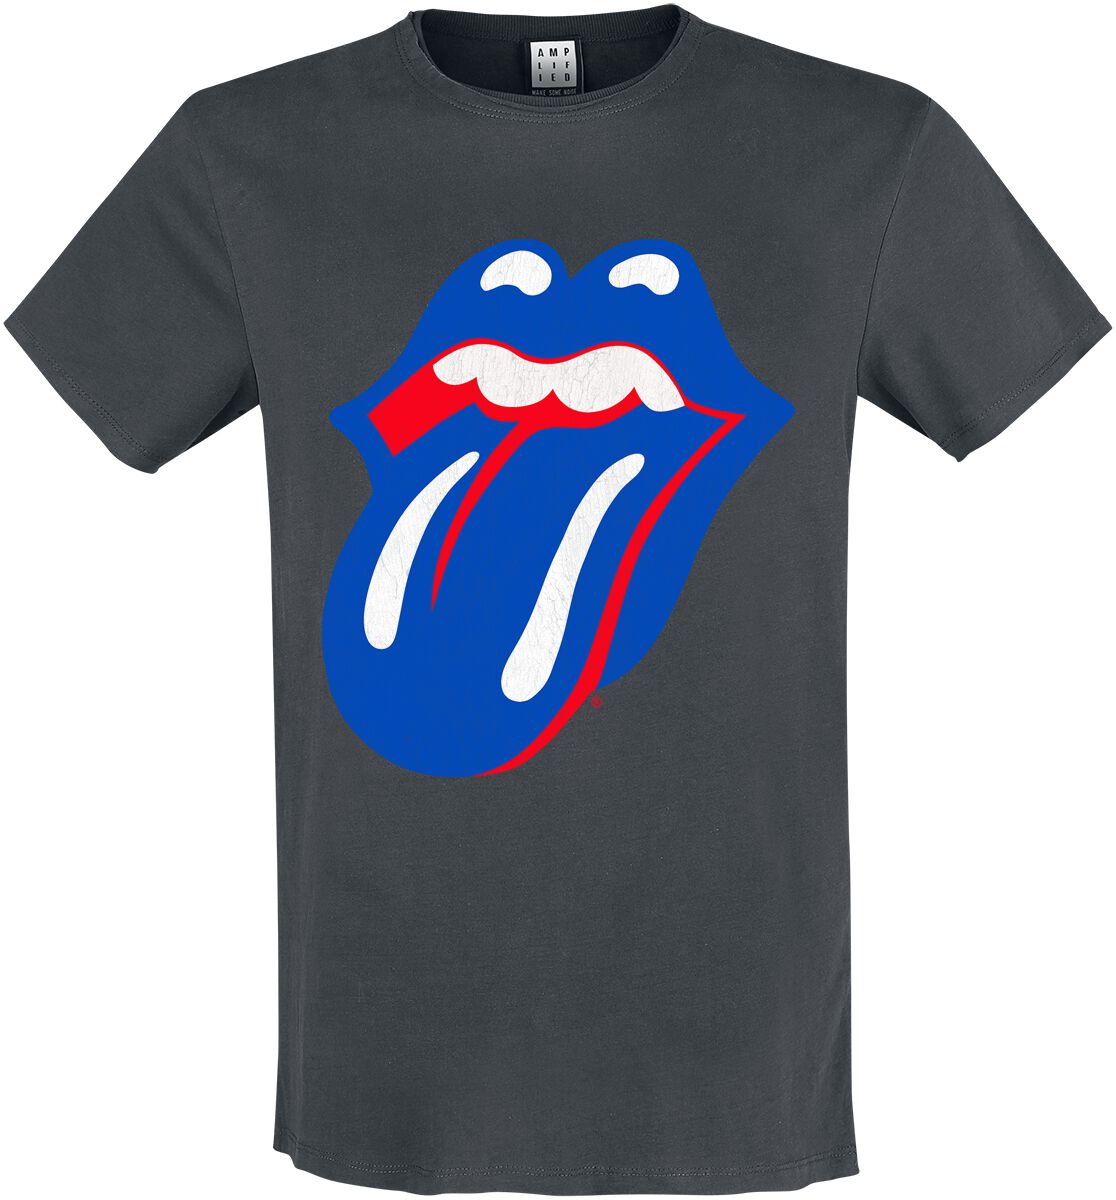 The Rolling Stones T-Shirt - Amplified Collection - Blue & Lonesome - S bis L - für Männer - Größe L - charcoal  - Lizenziertes Merchandise!